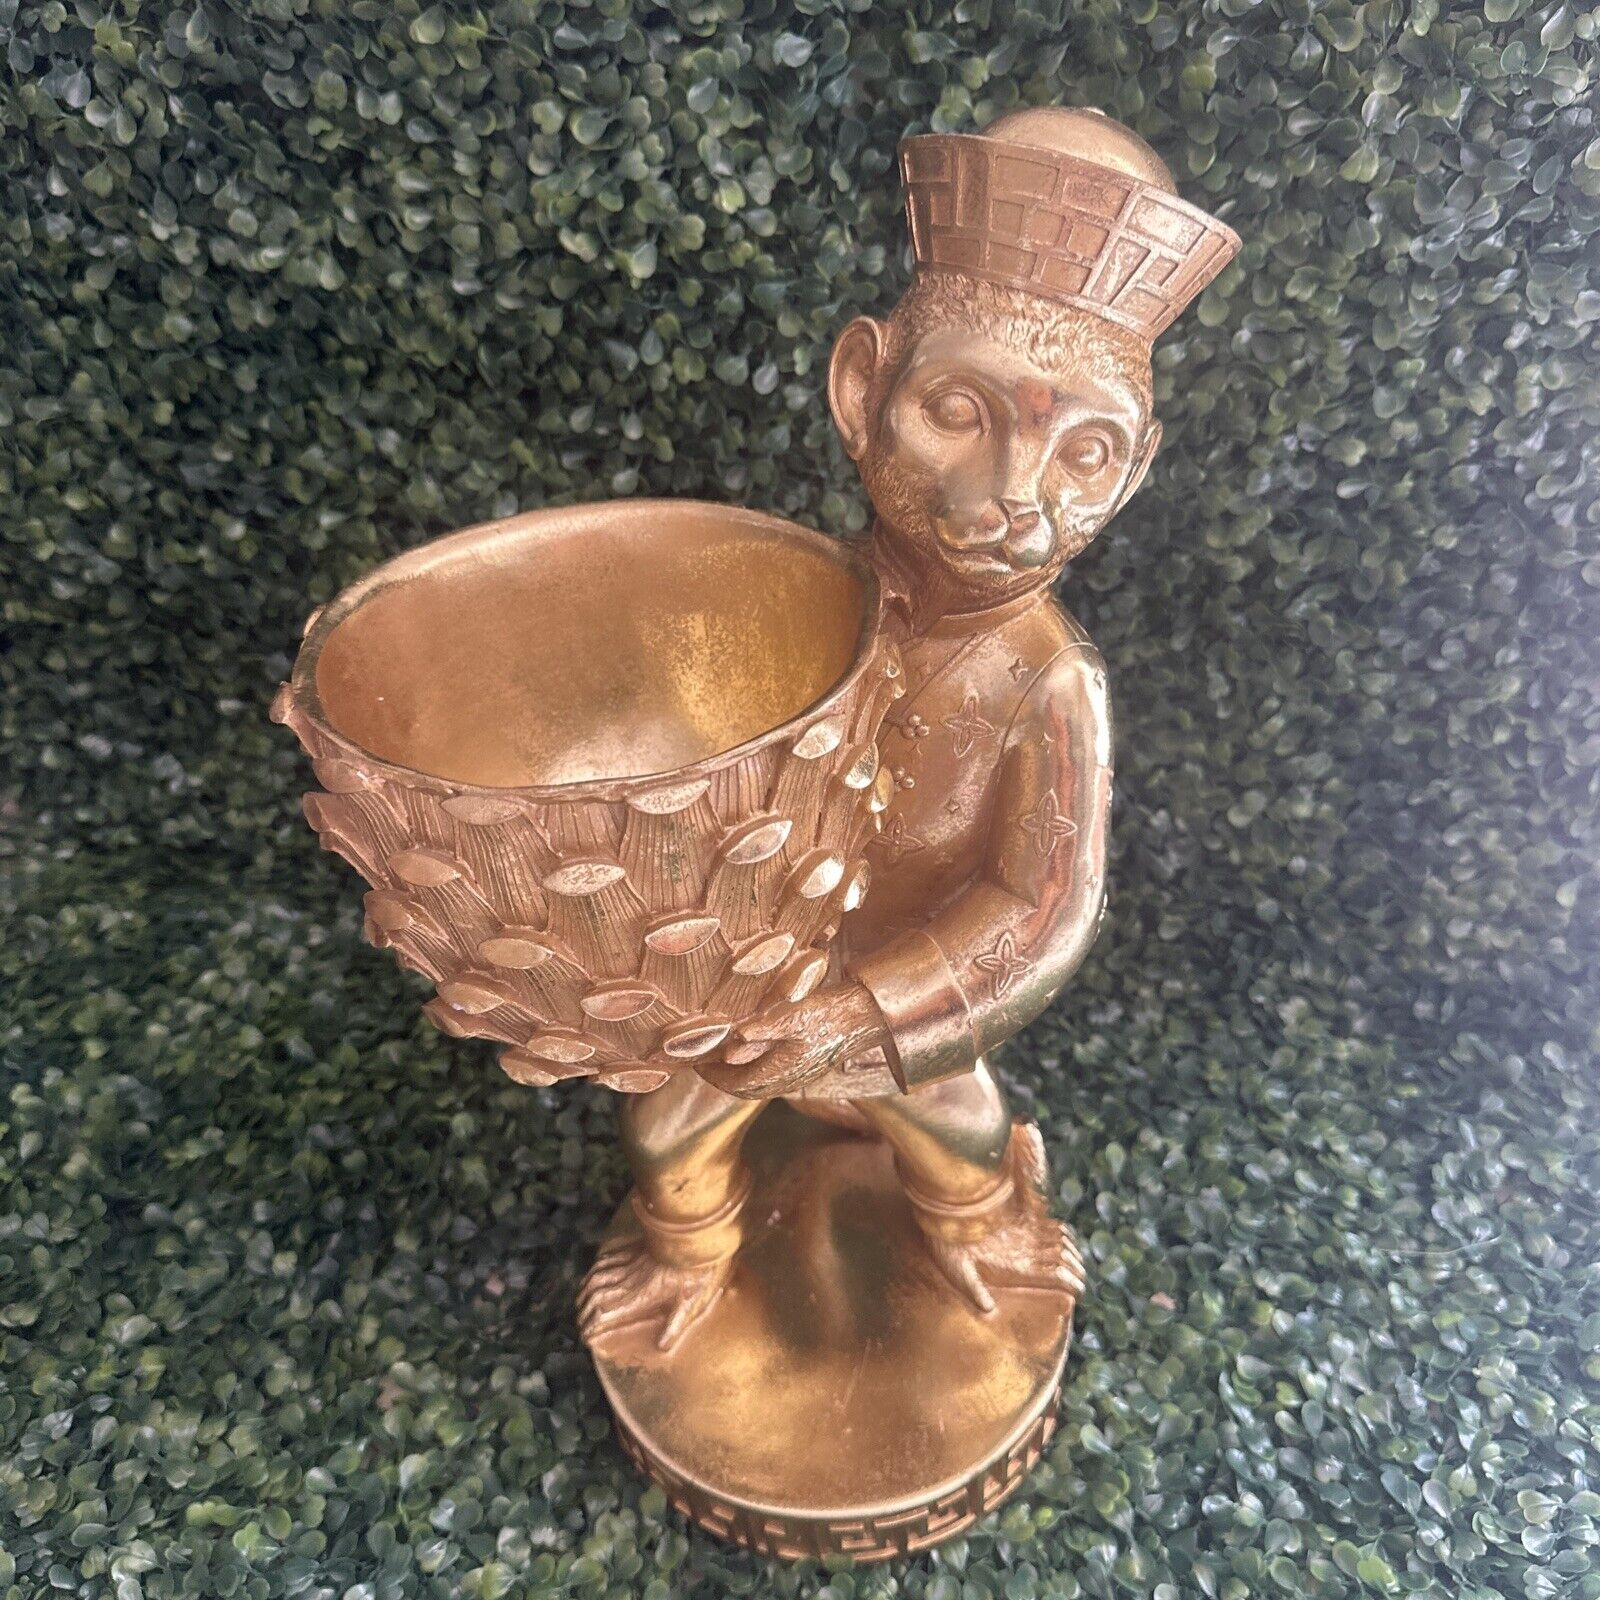 Vintage Shiny  Gold Monkey Sculpture Holding A Bowl 16’’ Tall